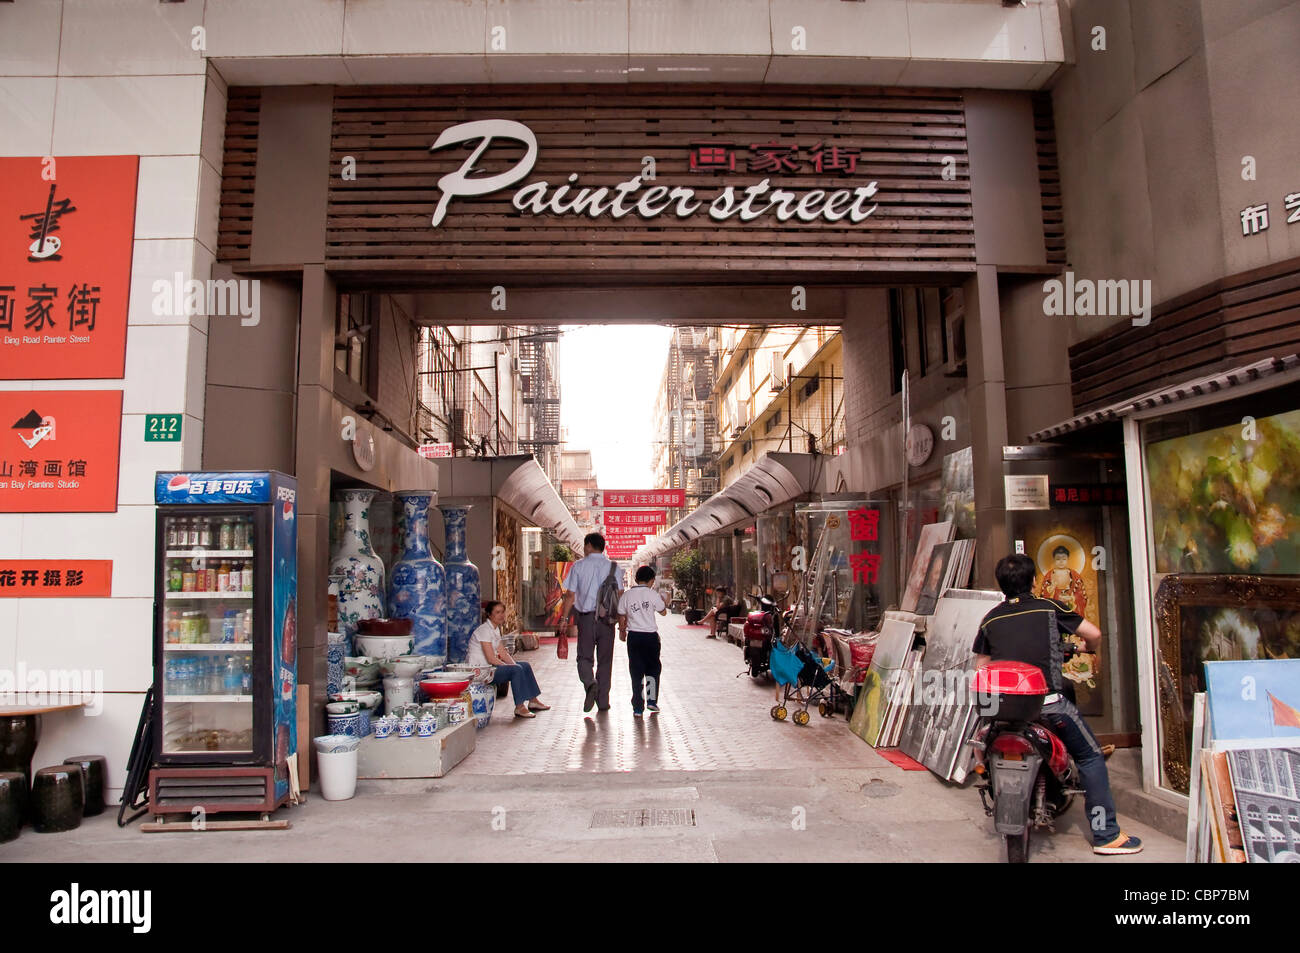 Painter street gate in Shanghai - China Stock Photo